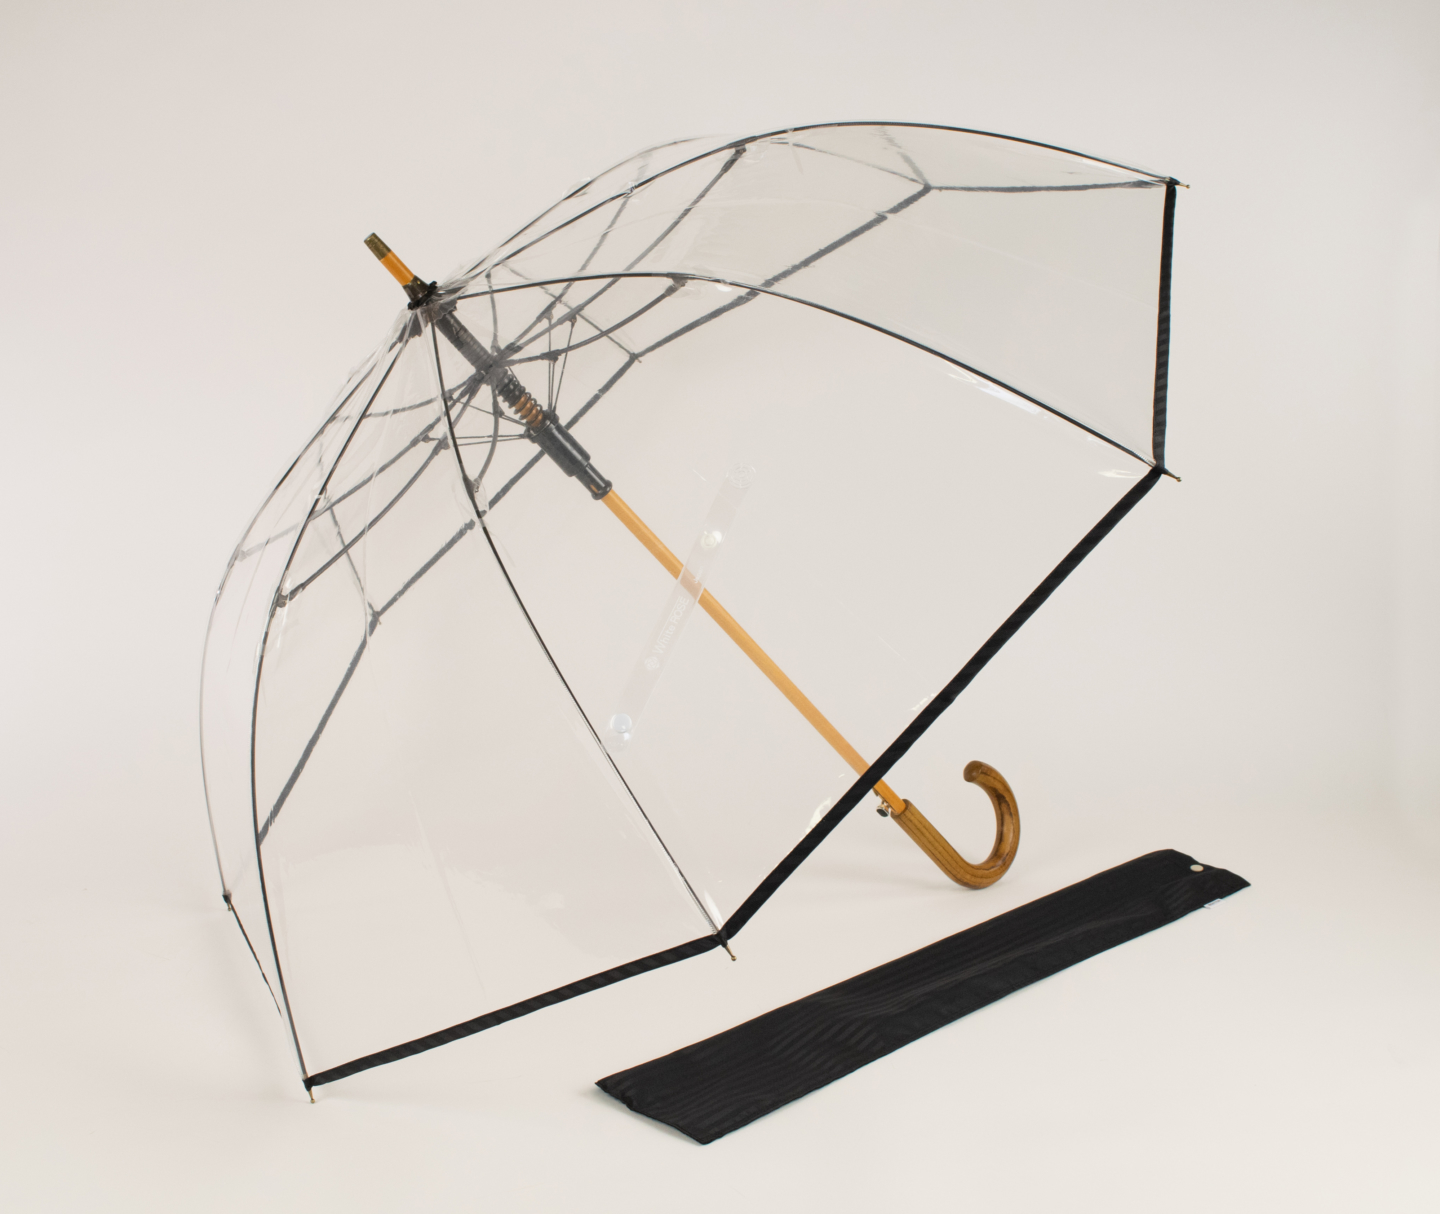 A gentleman’s plastic umbrella that would even suit James Bond